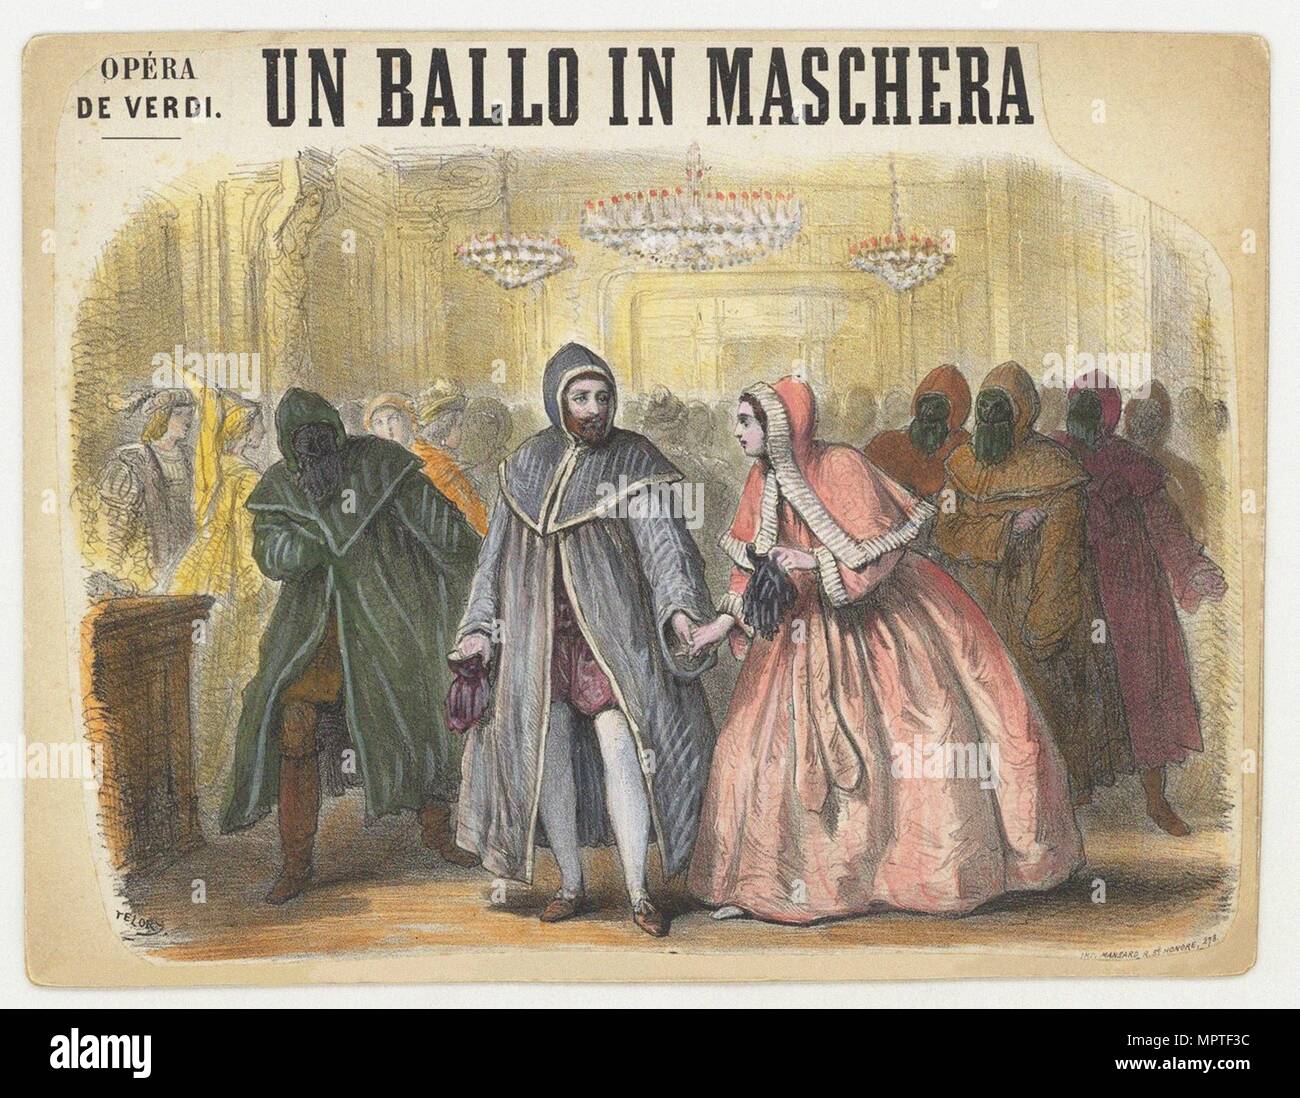 Opera Un Ballo in maschera di Giuseppe Verdi, Parigi, Théâtre Italien, 1861  Foto stock - Alamy